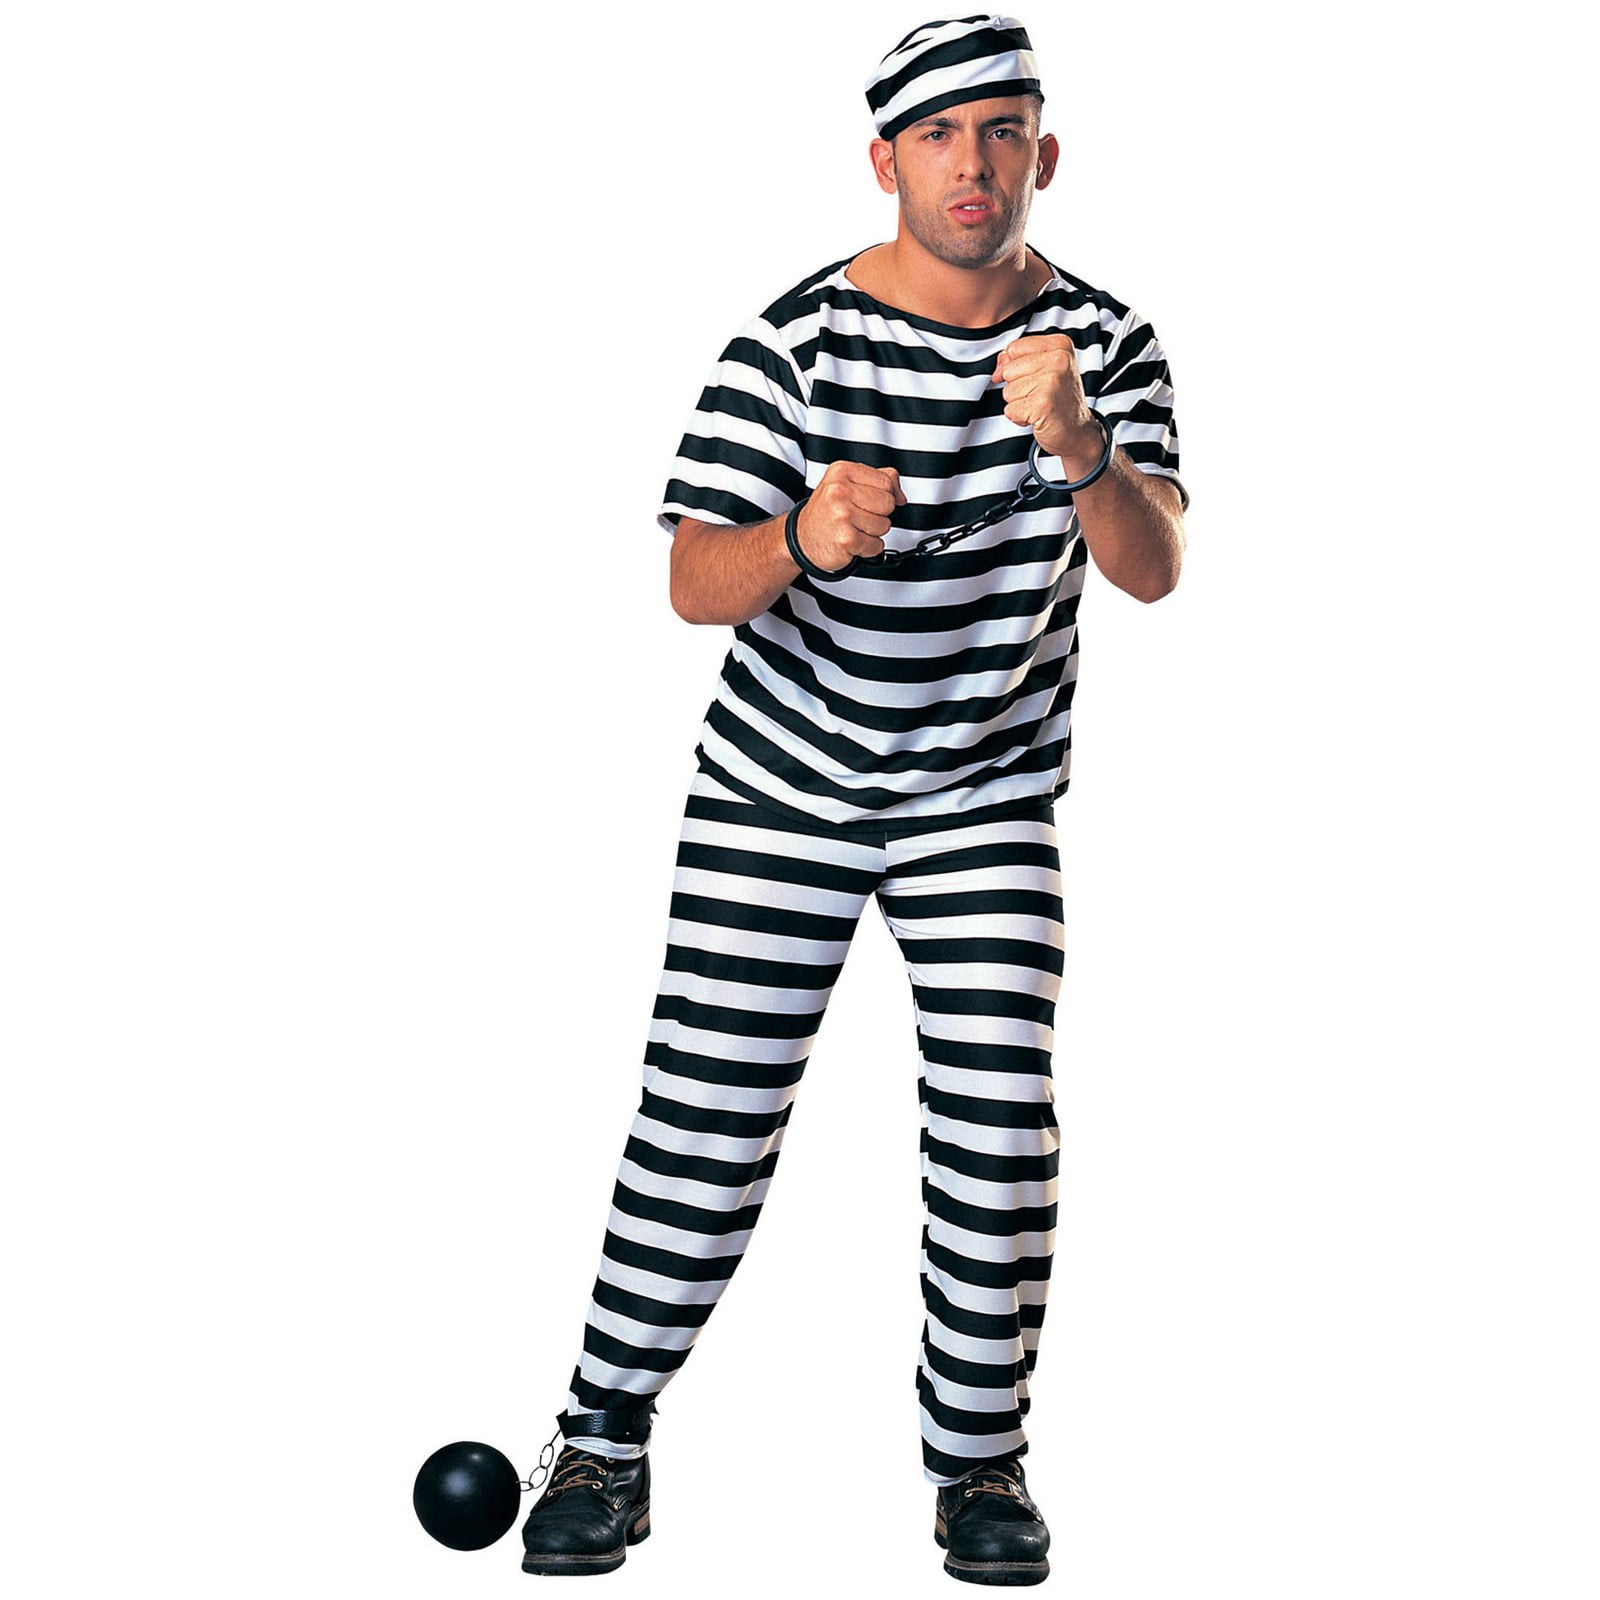 Miss Behaved Prisoner Costume